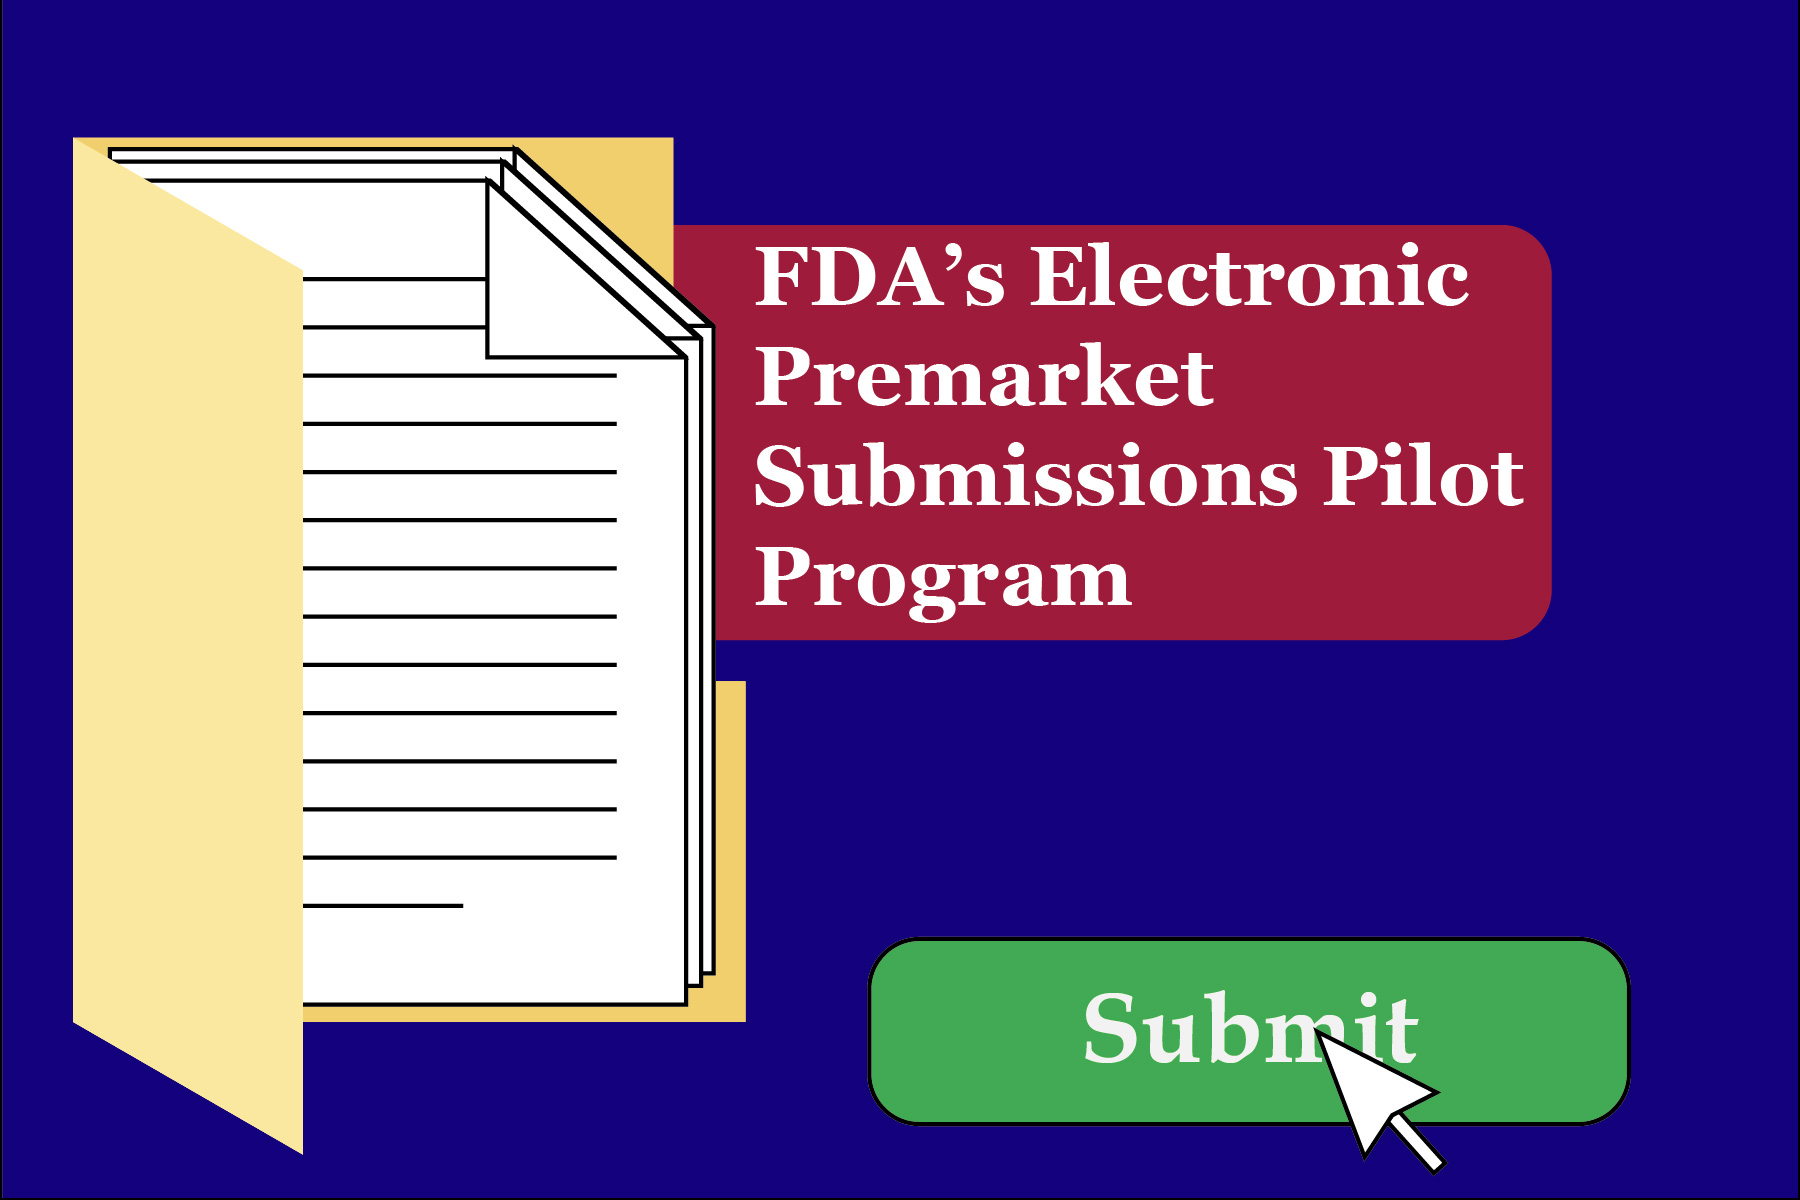 FDA’s Electronic Premarket Submissions Pilot Program